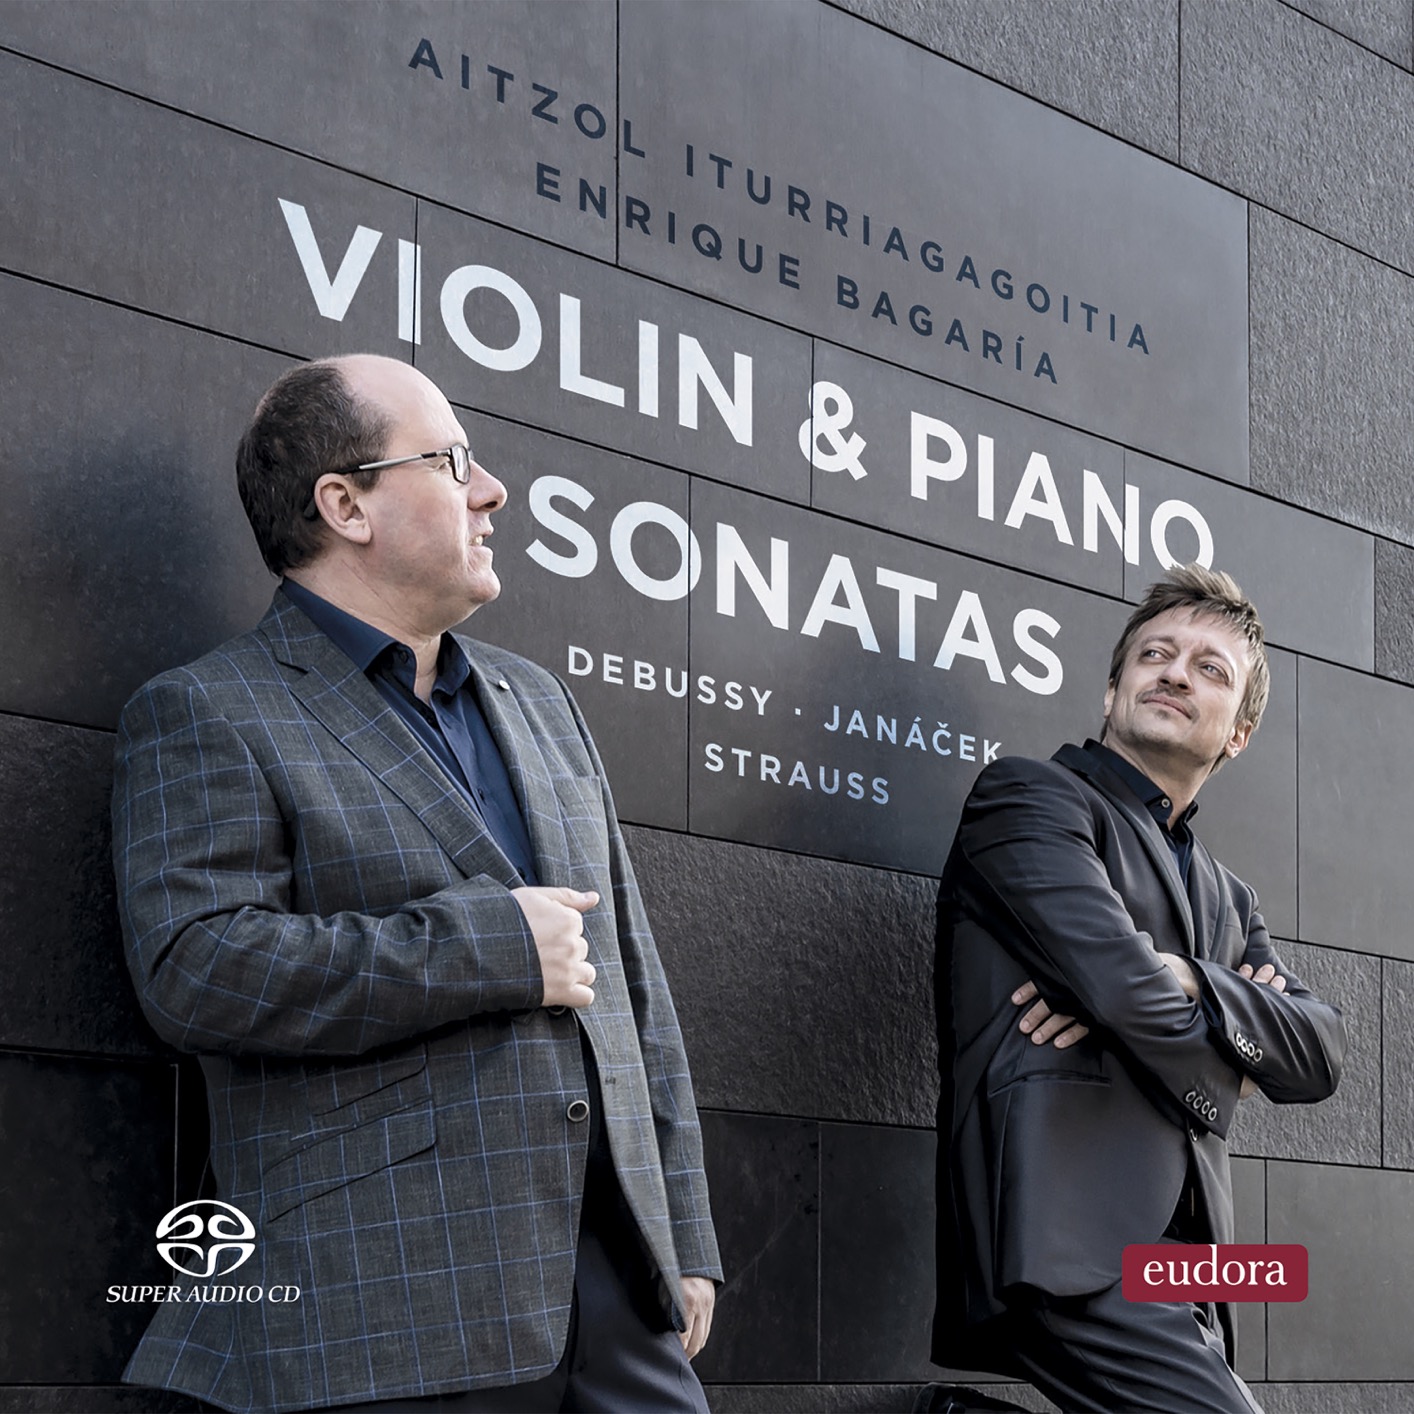 Aitzol Iturriagagoitia & Enrique Bagaria – Debussy, Janacek, Strauss: Violin & Piano Sonatas (2019) [FLAC 24bit/192kHz]